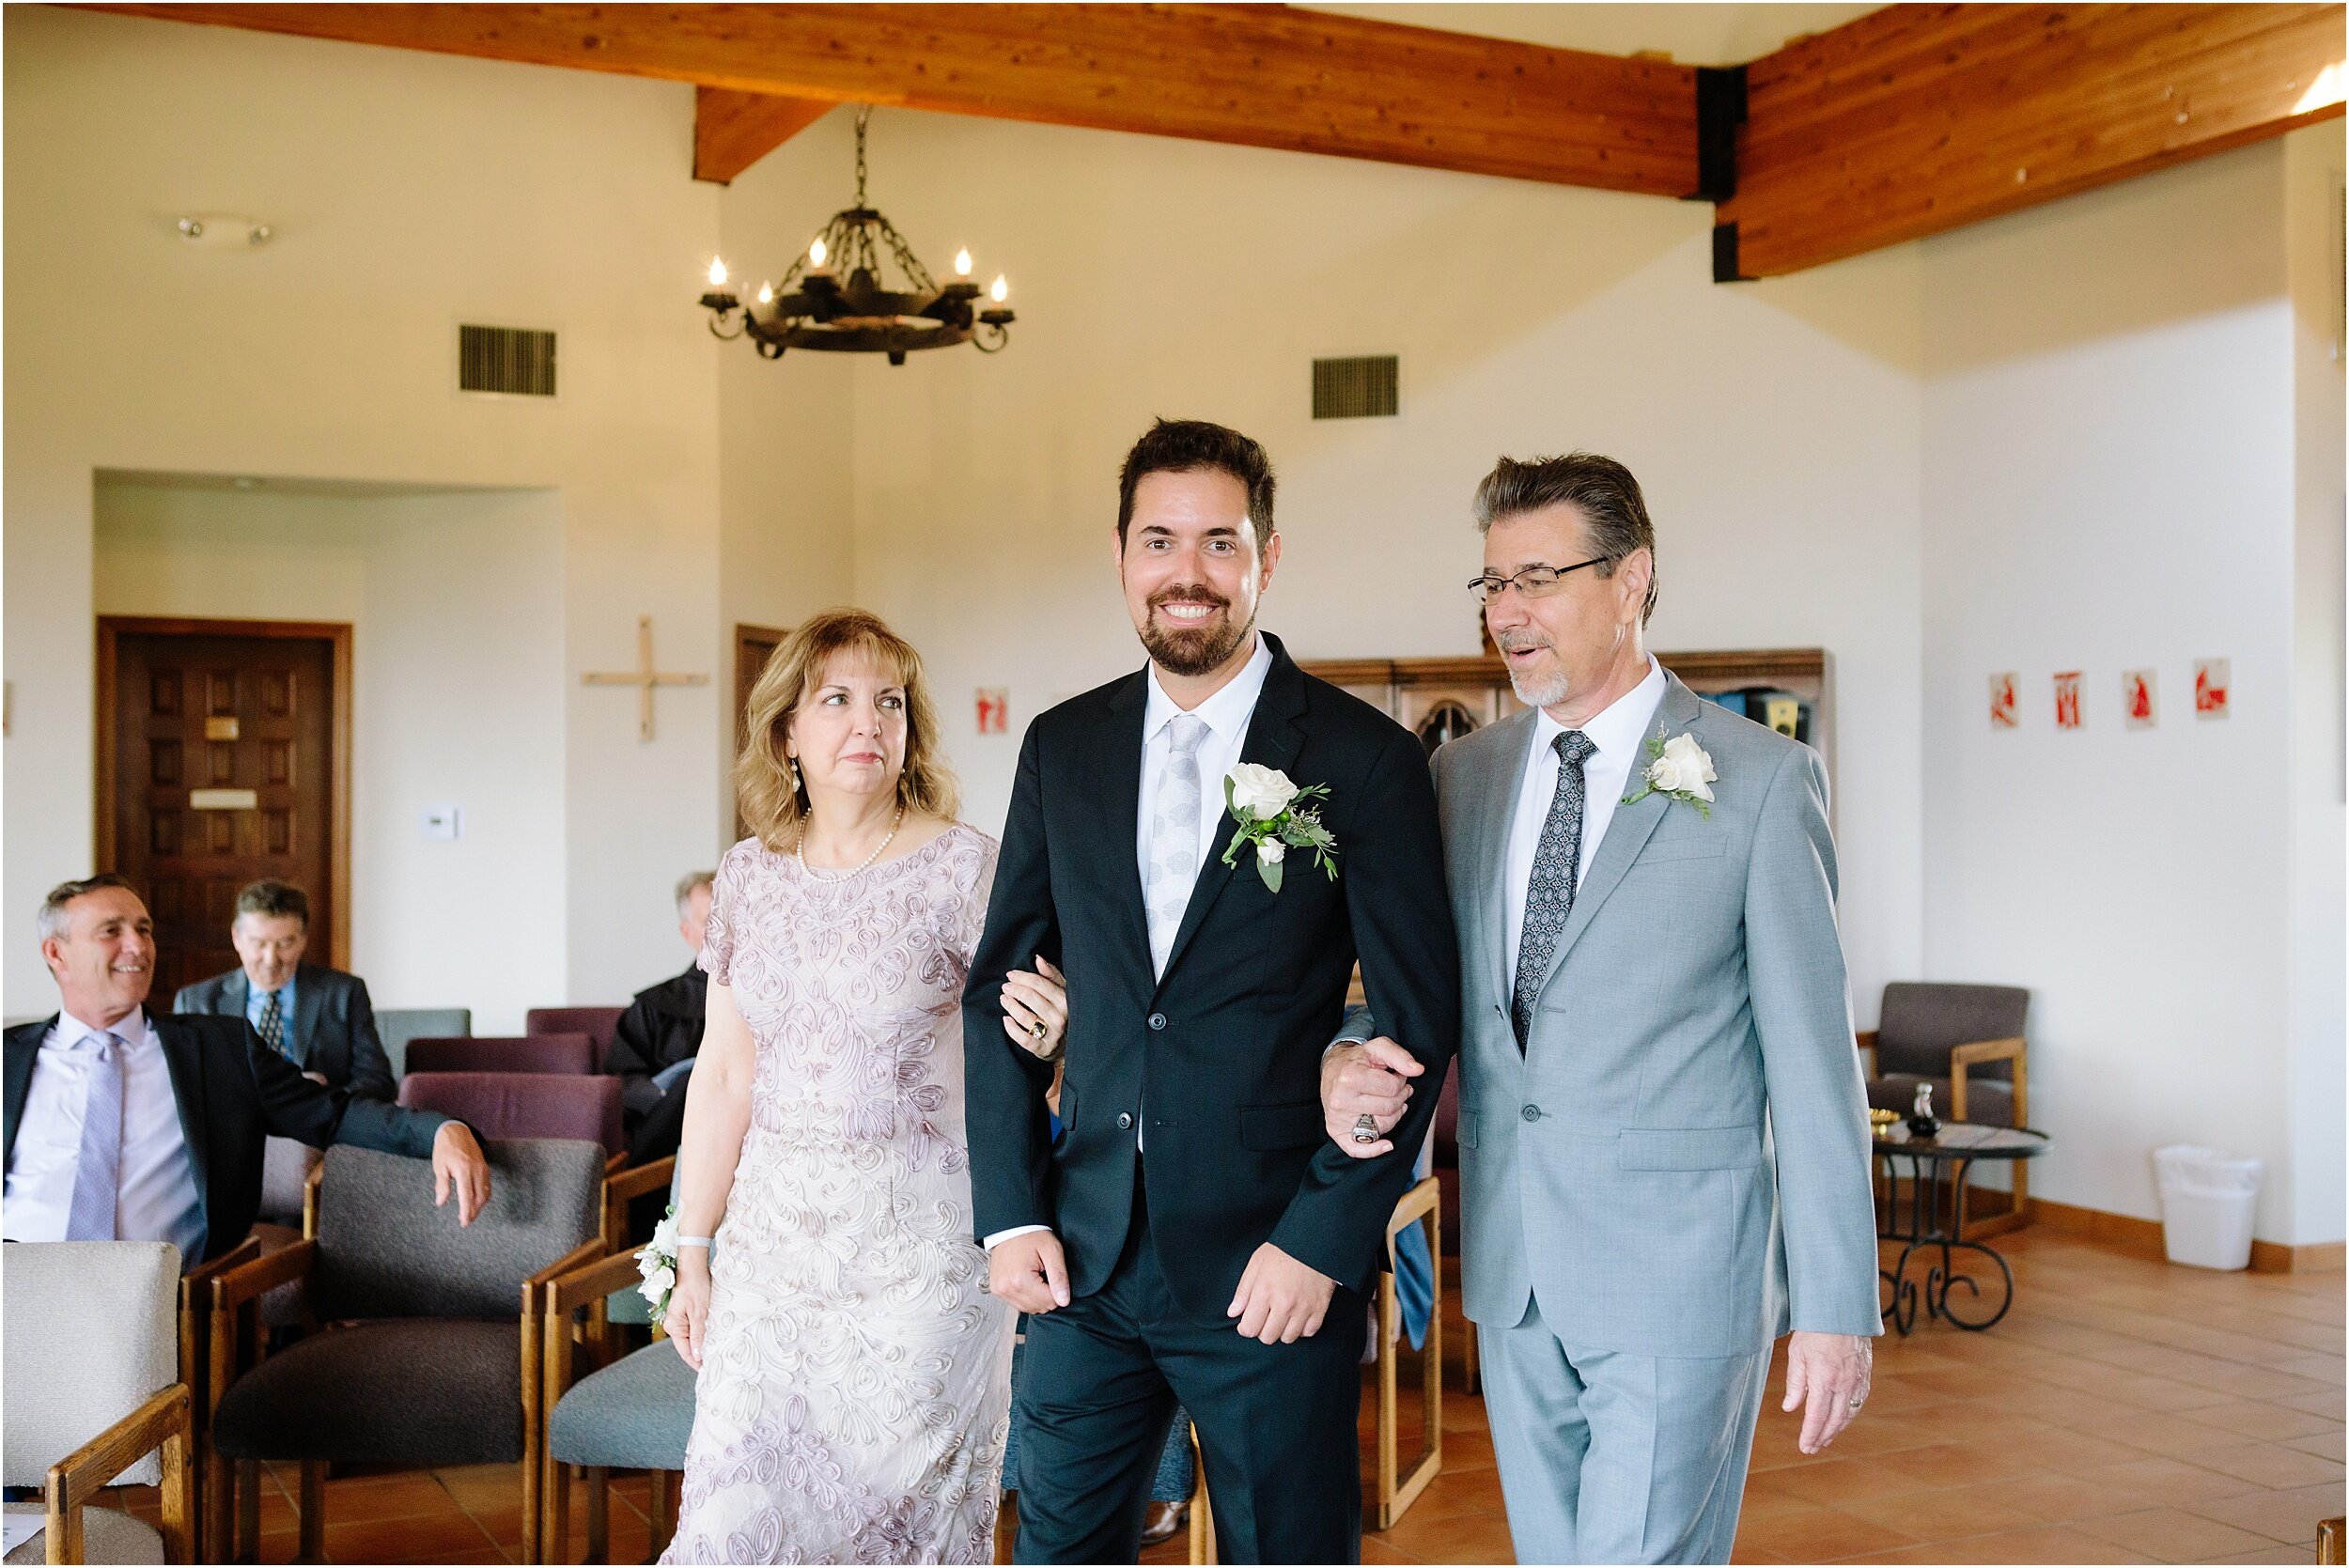 Caitlin and jason | Small Malibu Wedding | Malibu Elopement Photographer_0016.jpg